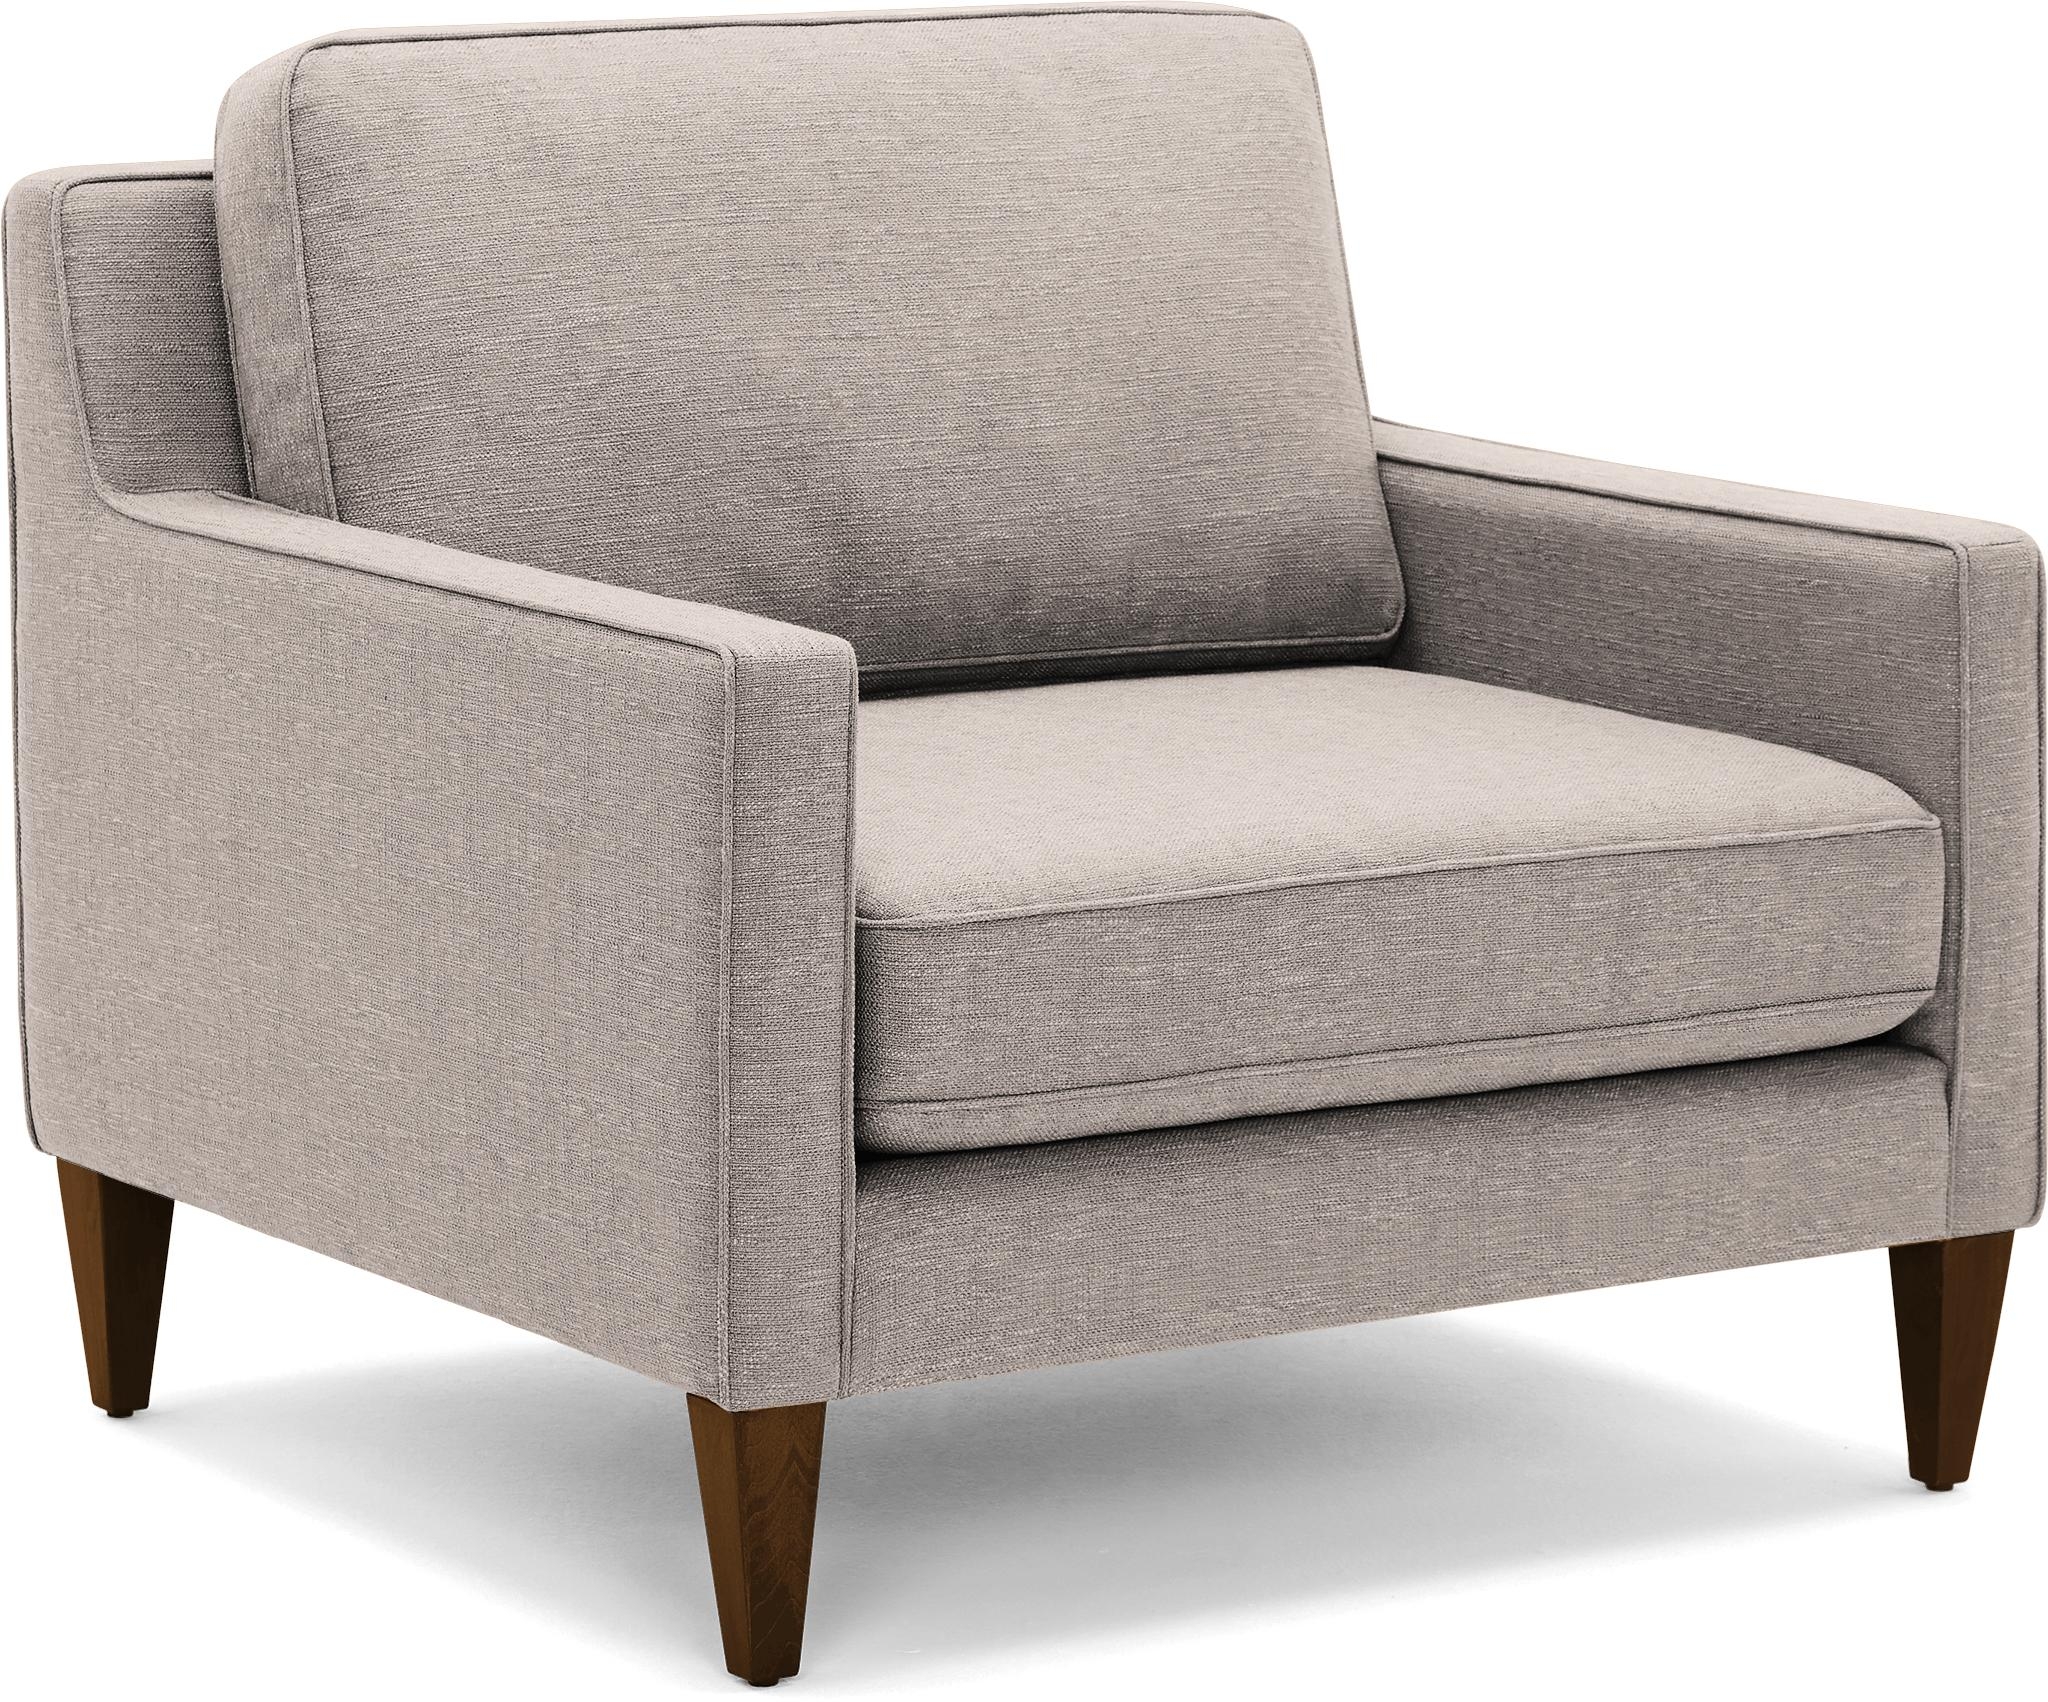 Gray Levi Mid Century Modern Chair - Notion Gunsmoke - Mocha - Image 1